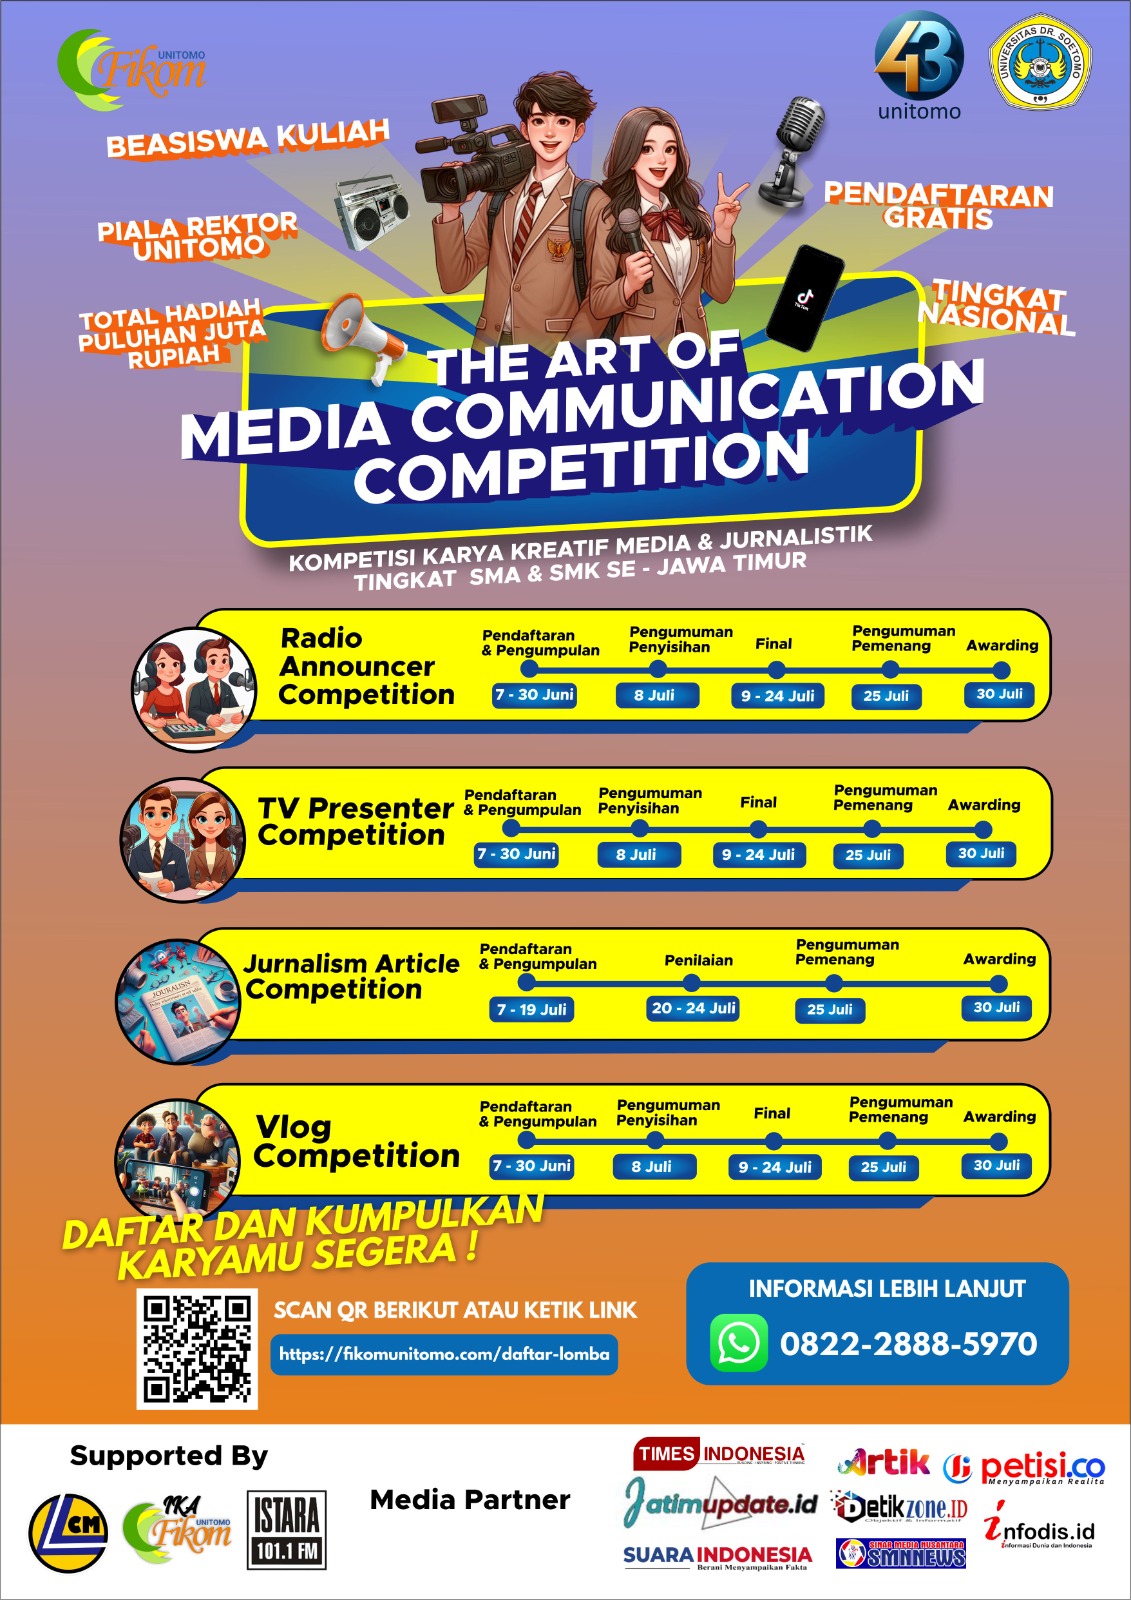 Pamflet kompetisi yang berjudul "The Art Of Media Communication Competition" atau kompetesi karya kreatif media & jurnalistik tingkat SMA dan SMK